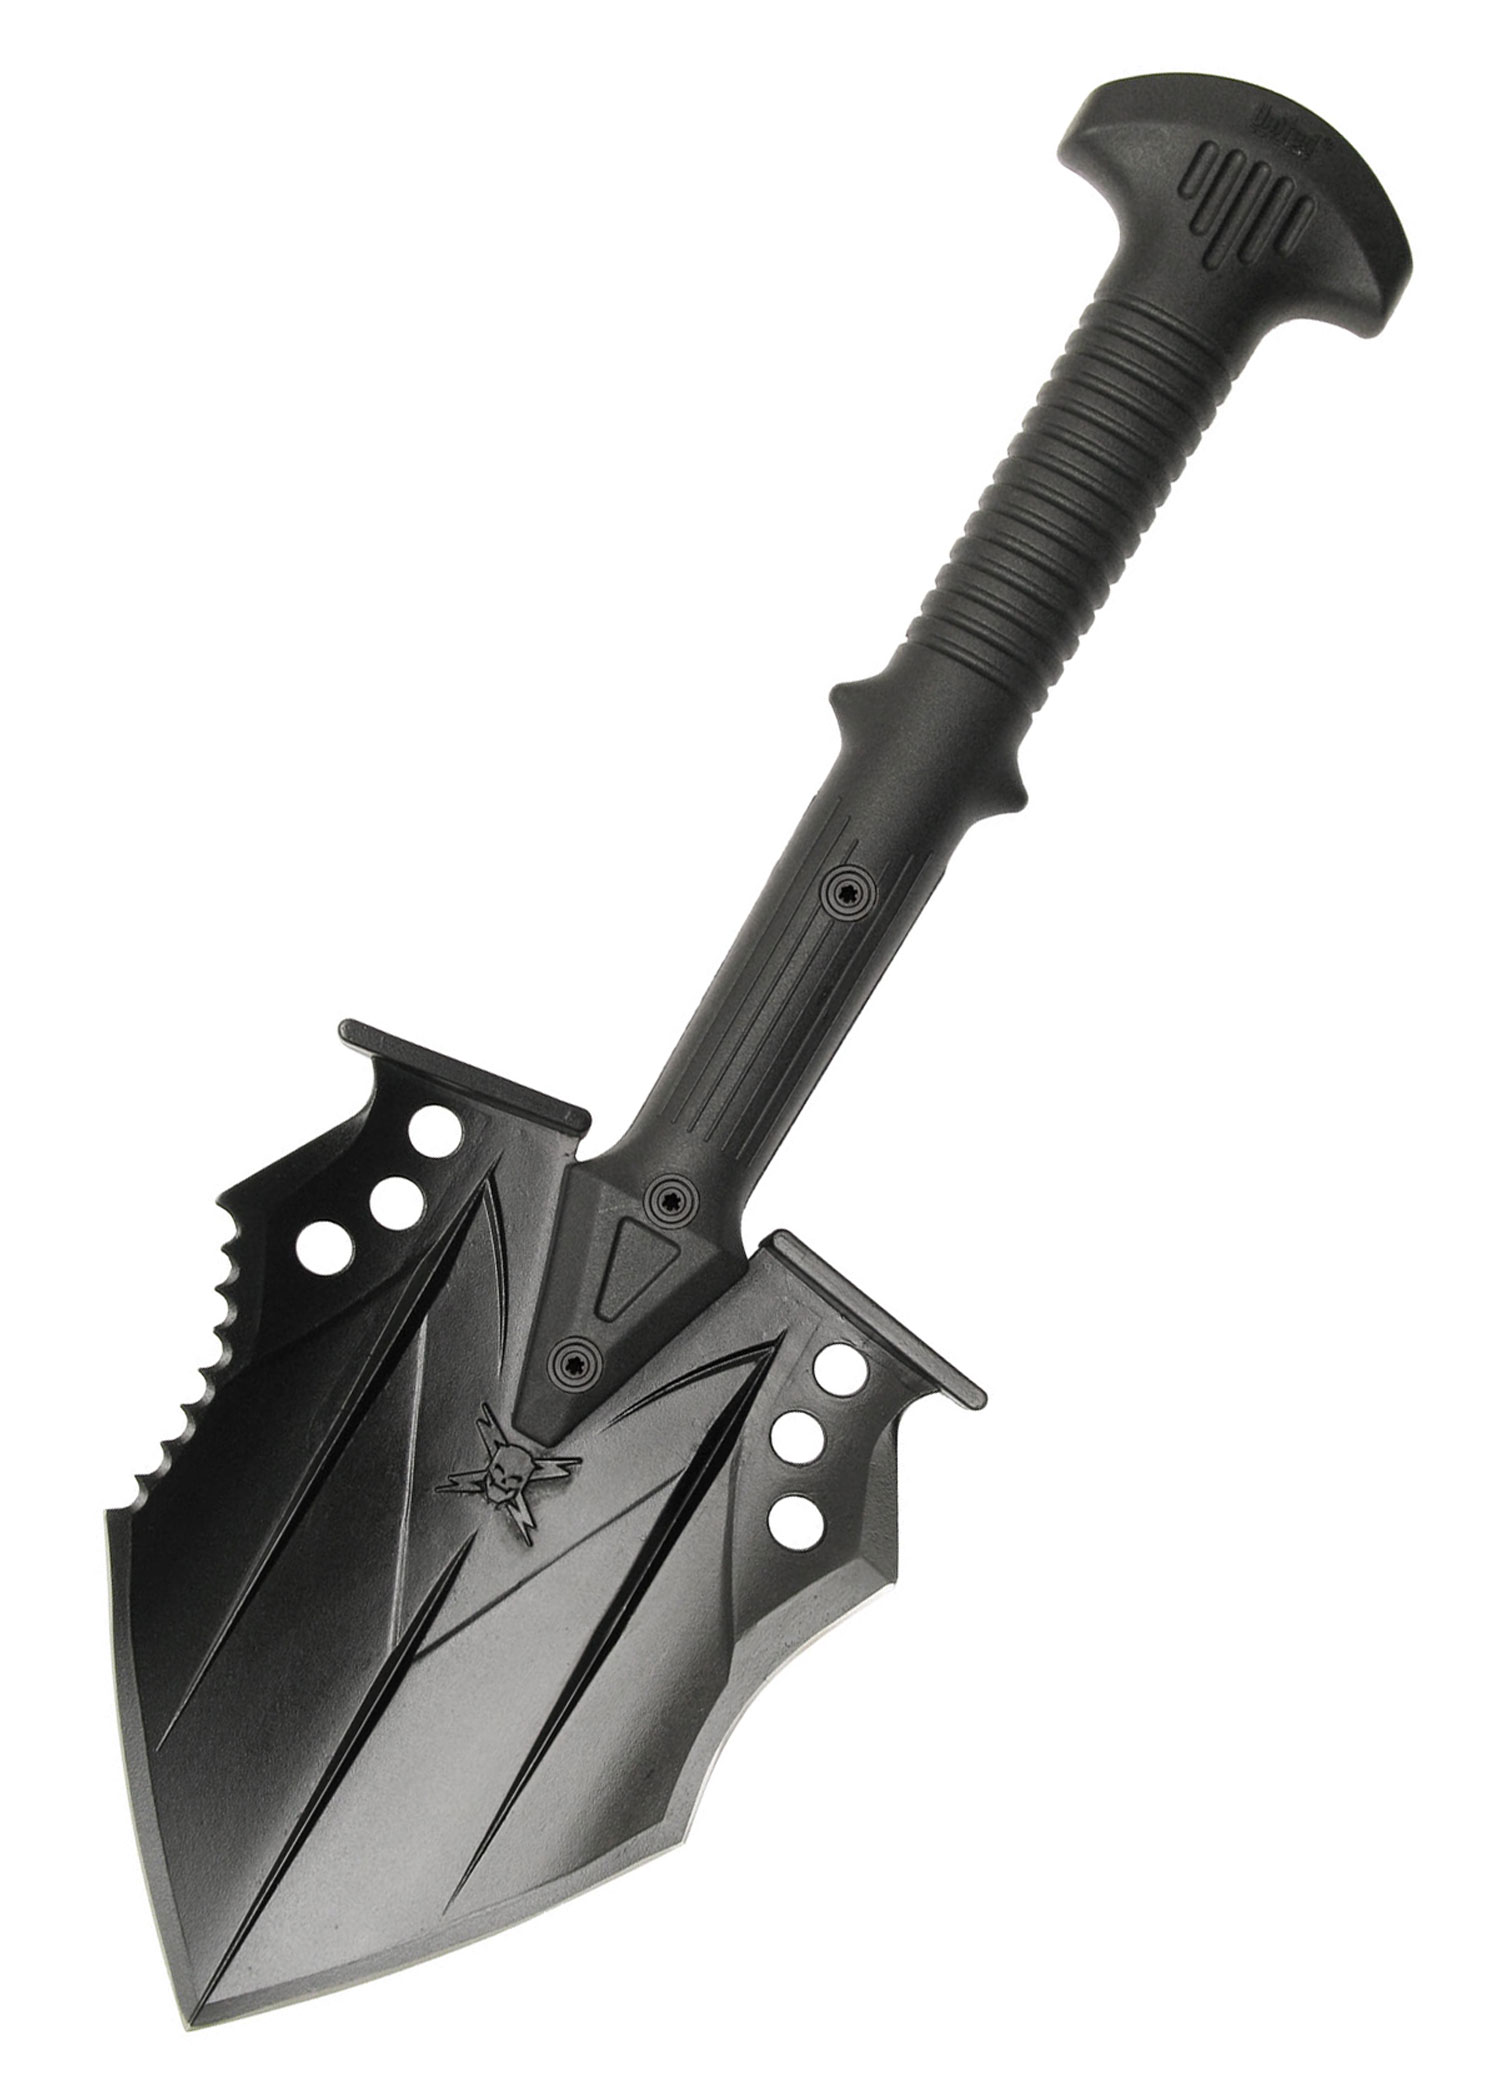 https://www.battlemerchant.com/media/image/14/85/f7/uc2979_united_cutlery_schaufel_m48_tactical_survival_shovel.jpg